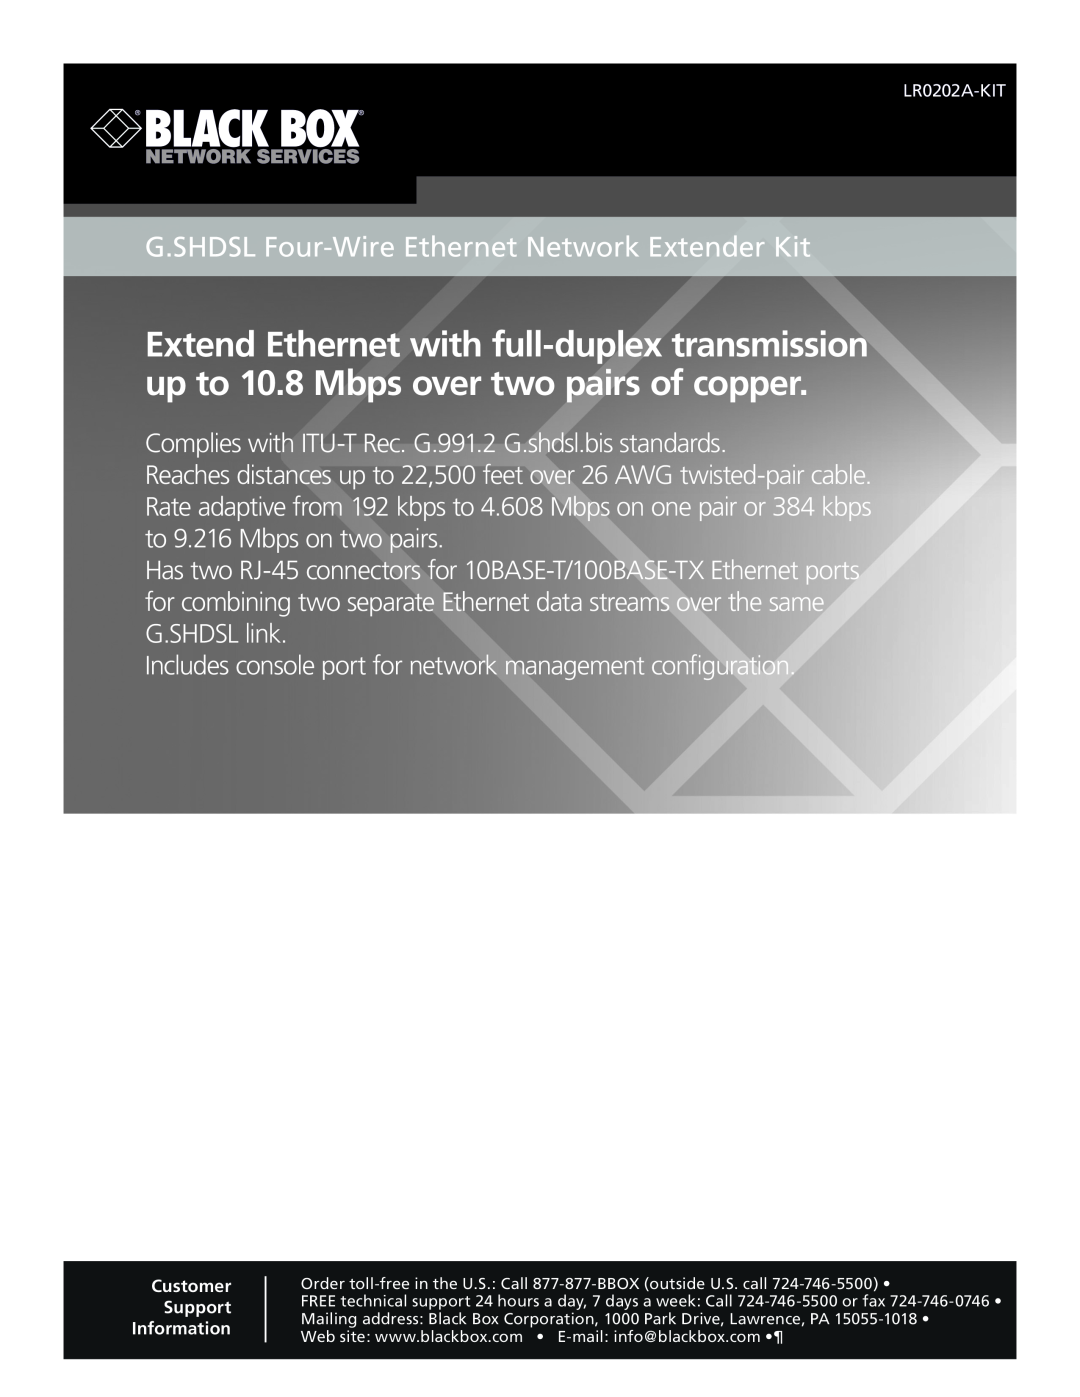 Black Box G.SHDSL Four-Wire Ethernet Network Extender Kit, LR0202A-KIT manual 